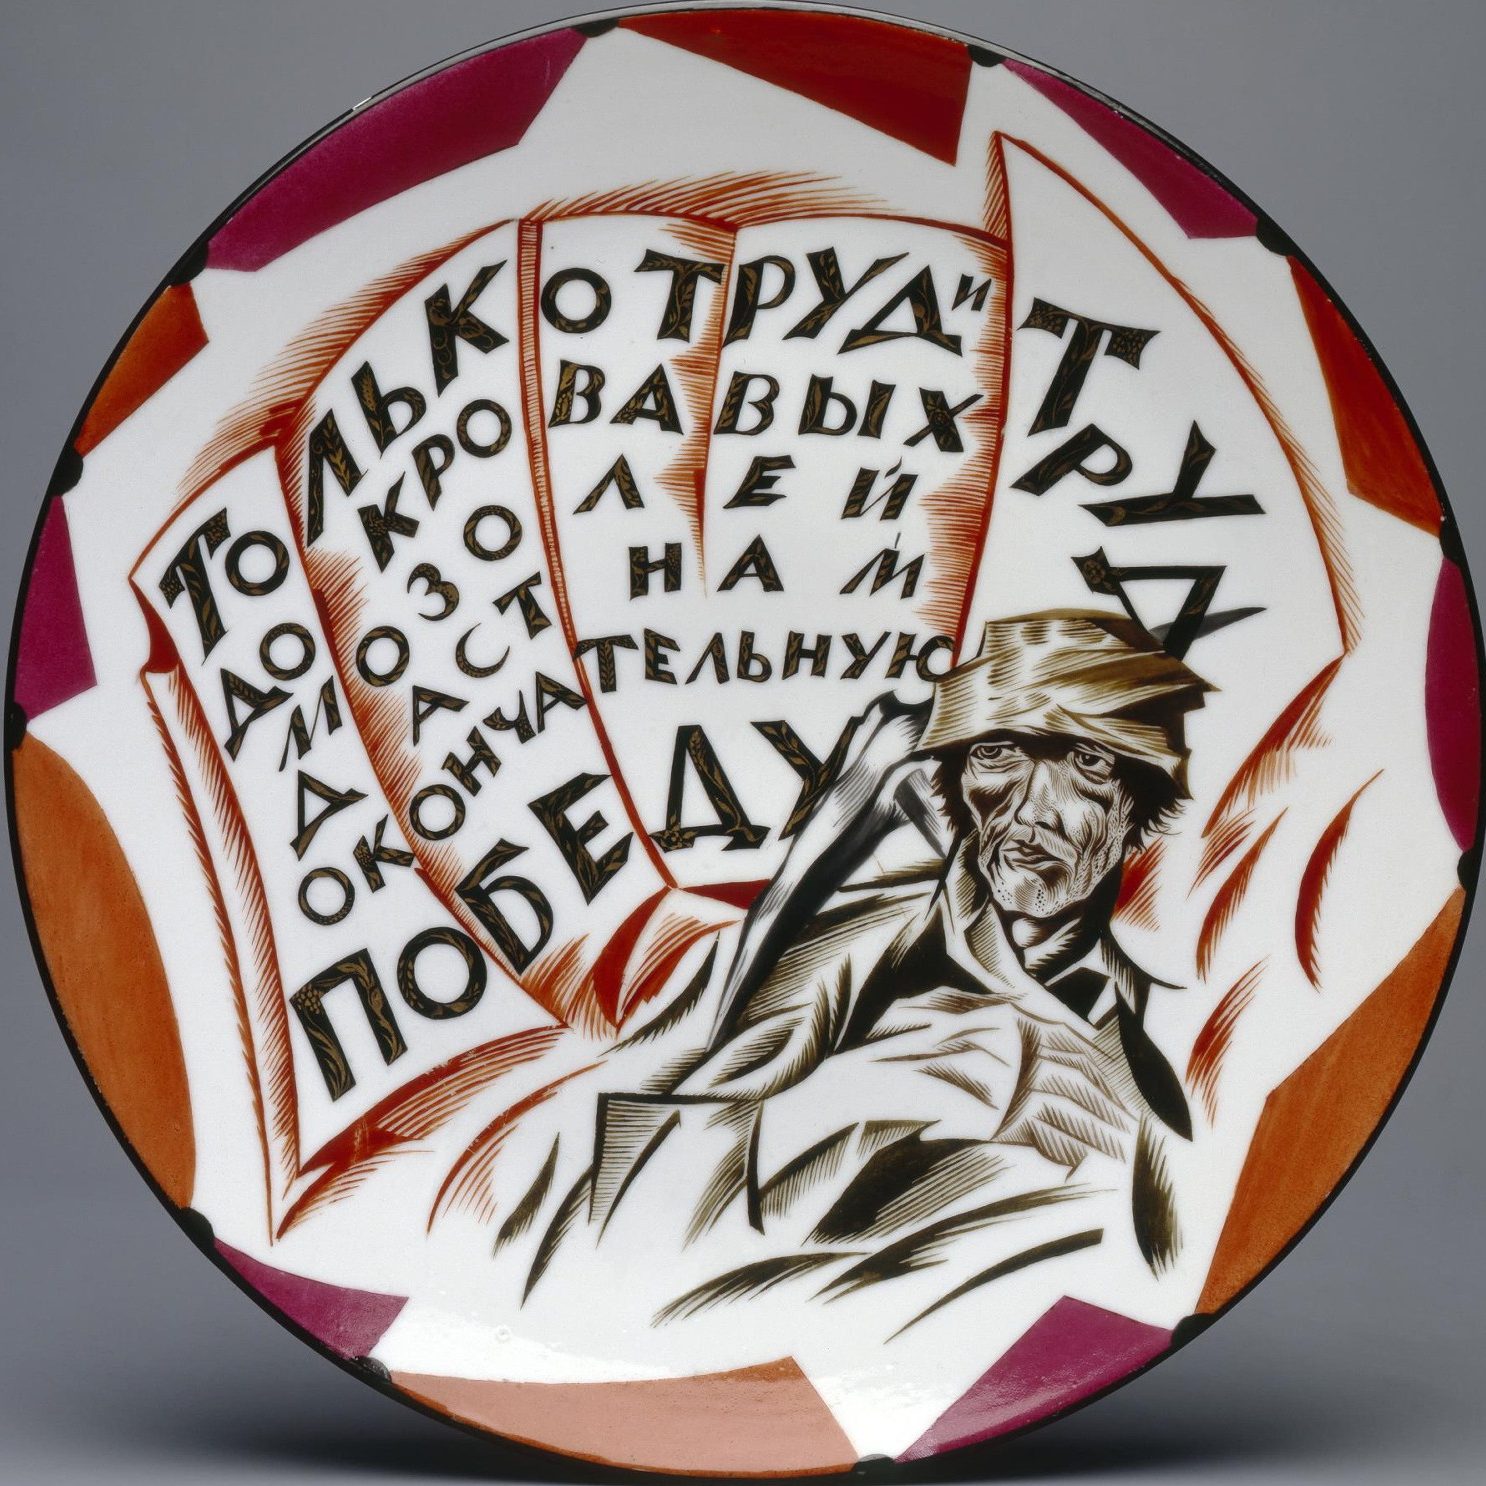 Soviet propaganda porcelain platter "Labor" after Chekhonin